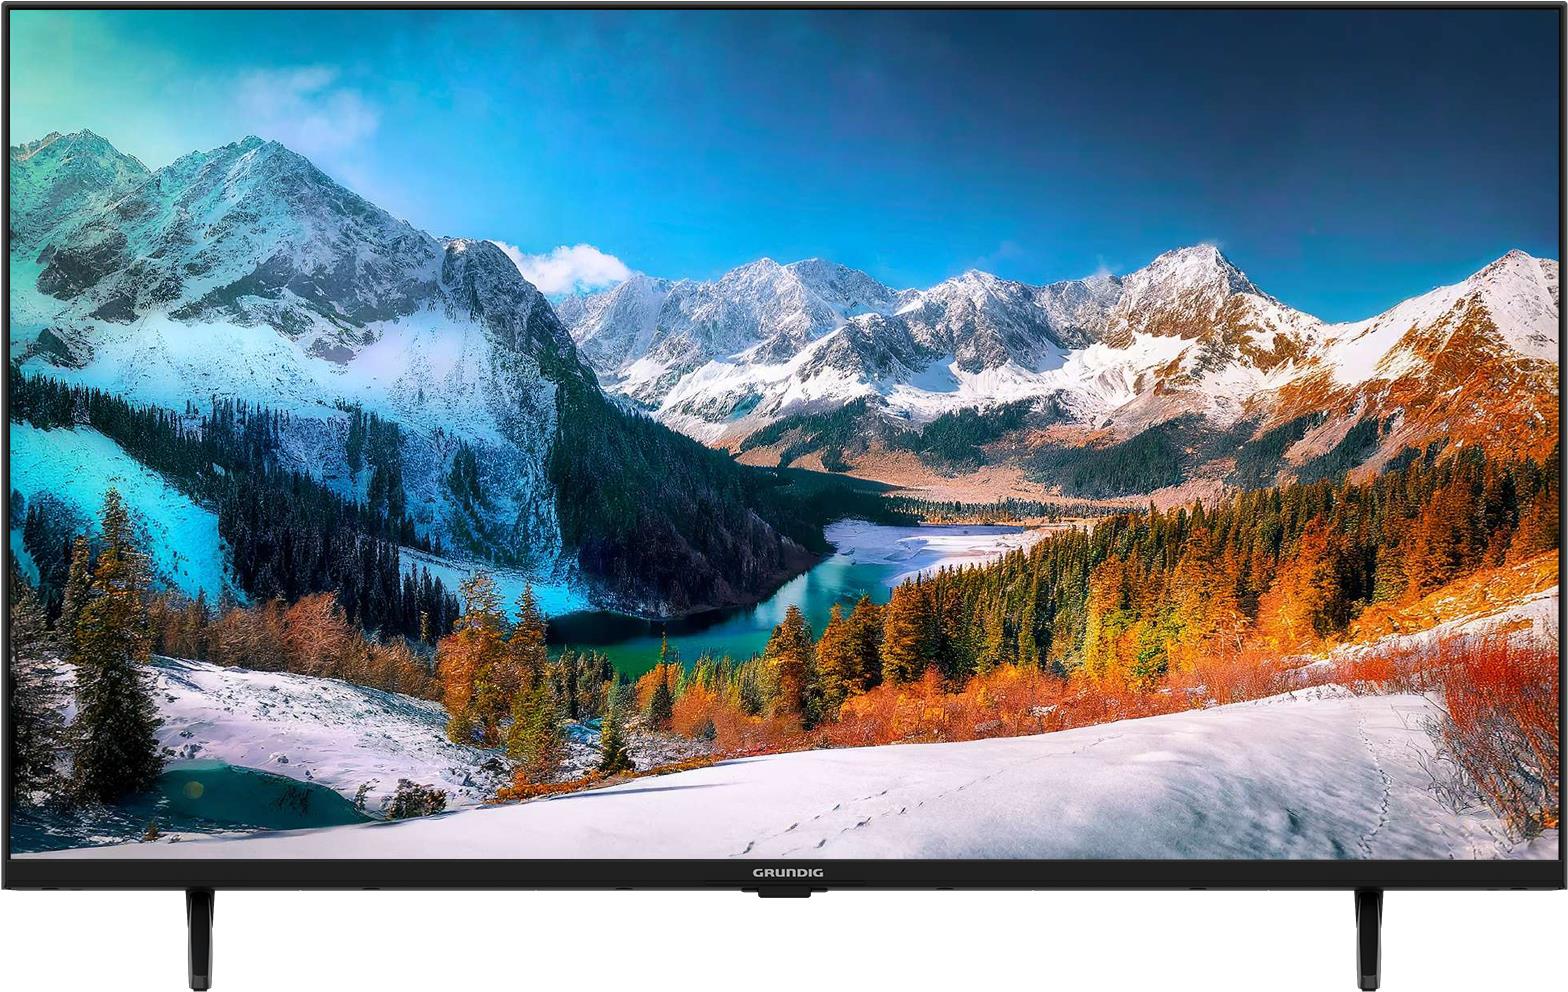 Grundig 40 GFB 6340 Fernseher - 101,6 cm - 40" - Full HD (1920x1080) - LED-Backlight TFT - 1080p - DVB-C - DVB-S2 - DVB-T2 - 600 Hz (40GFB6340)